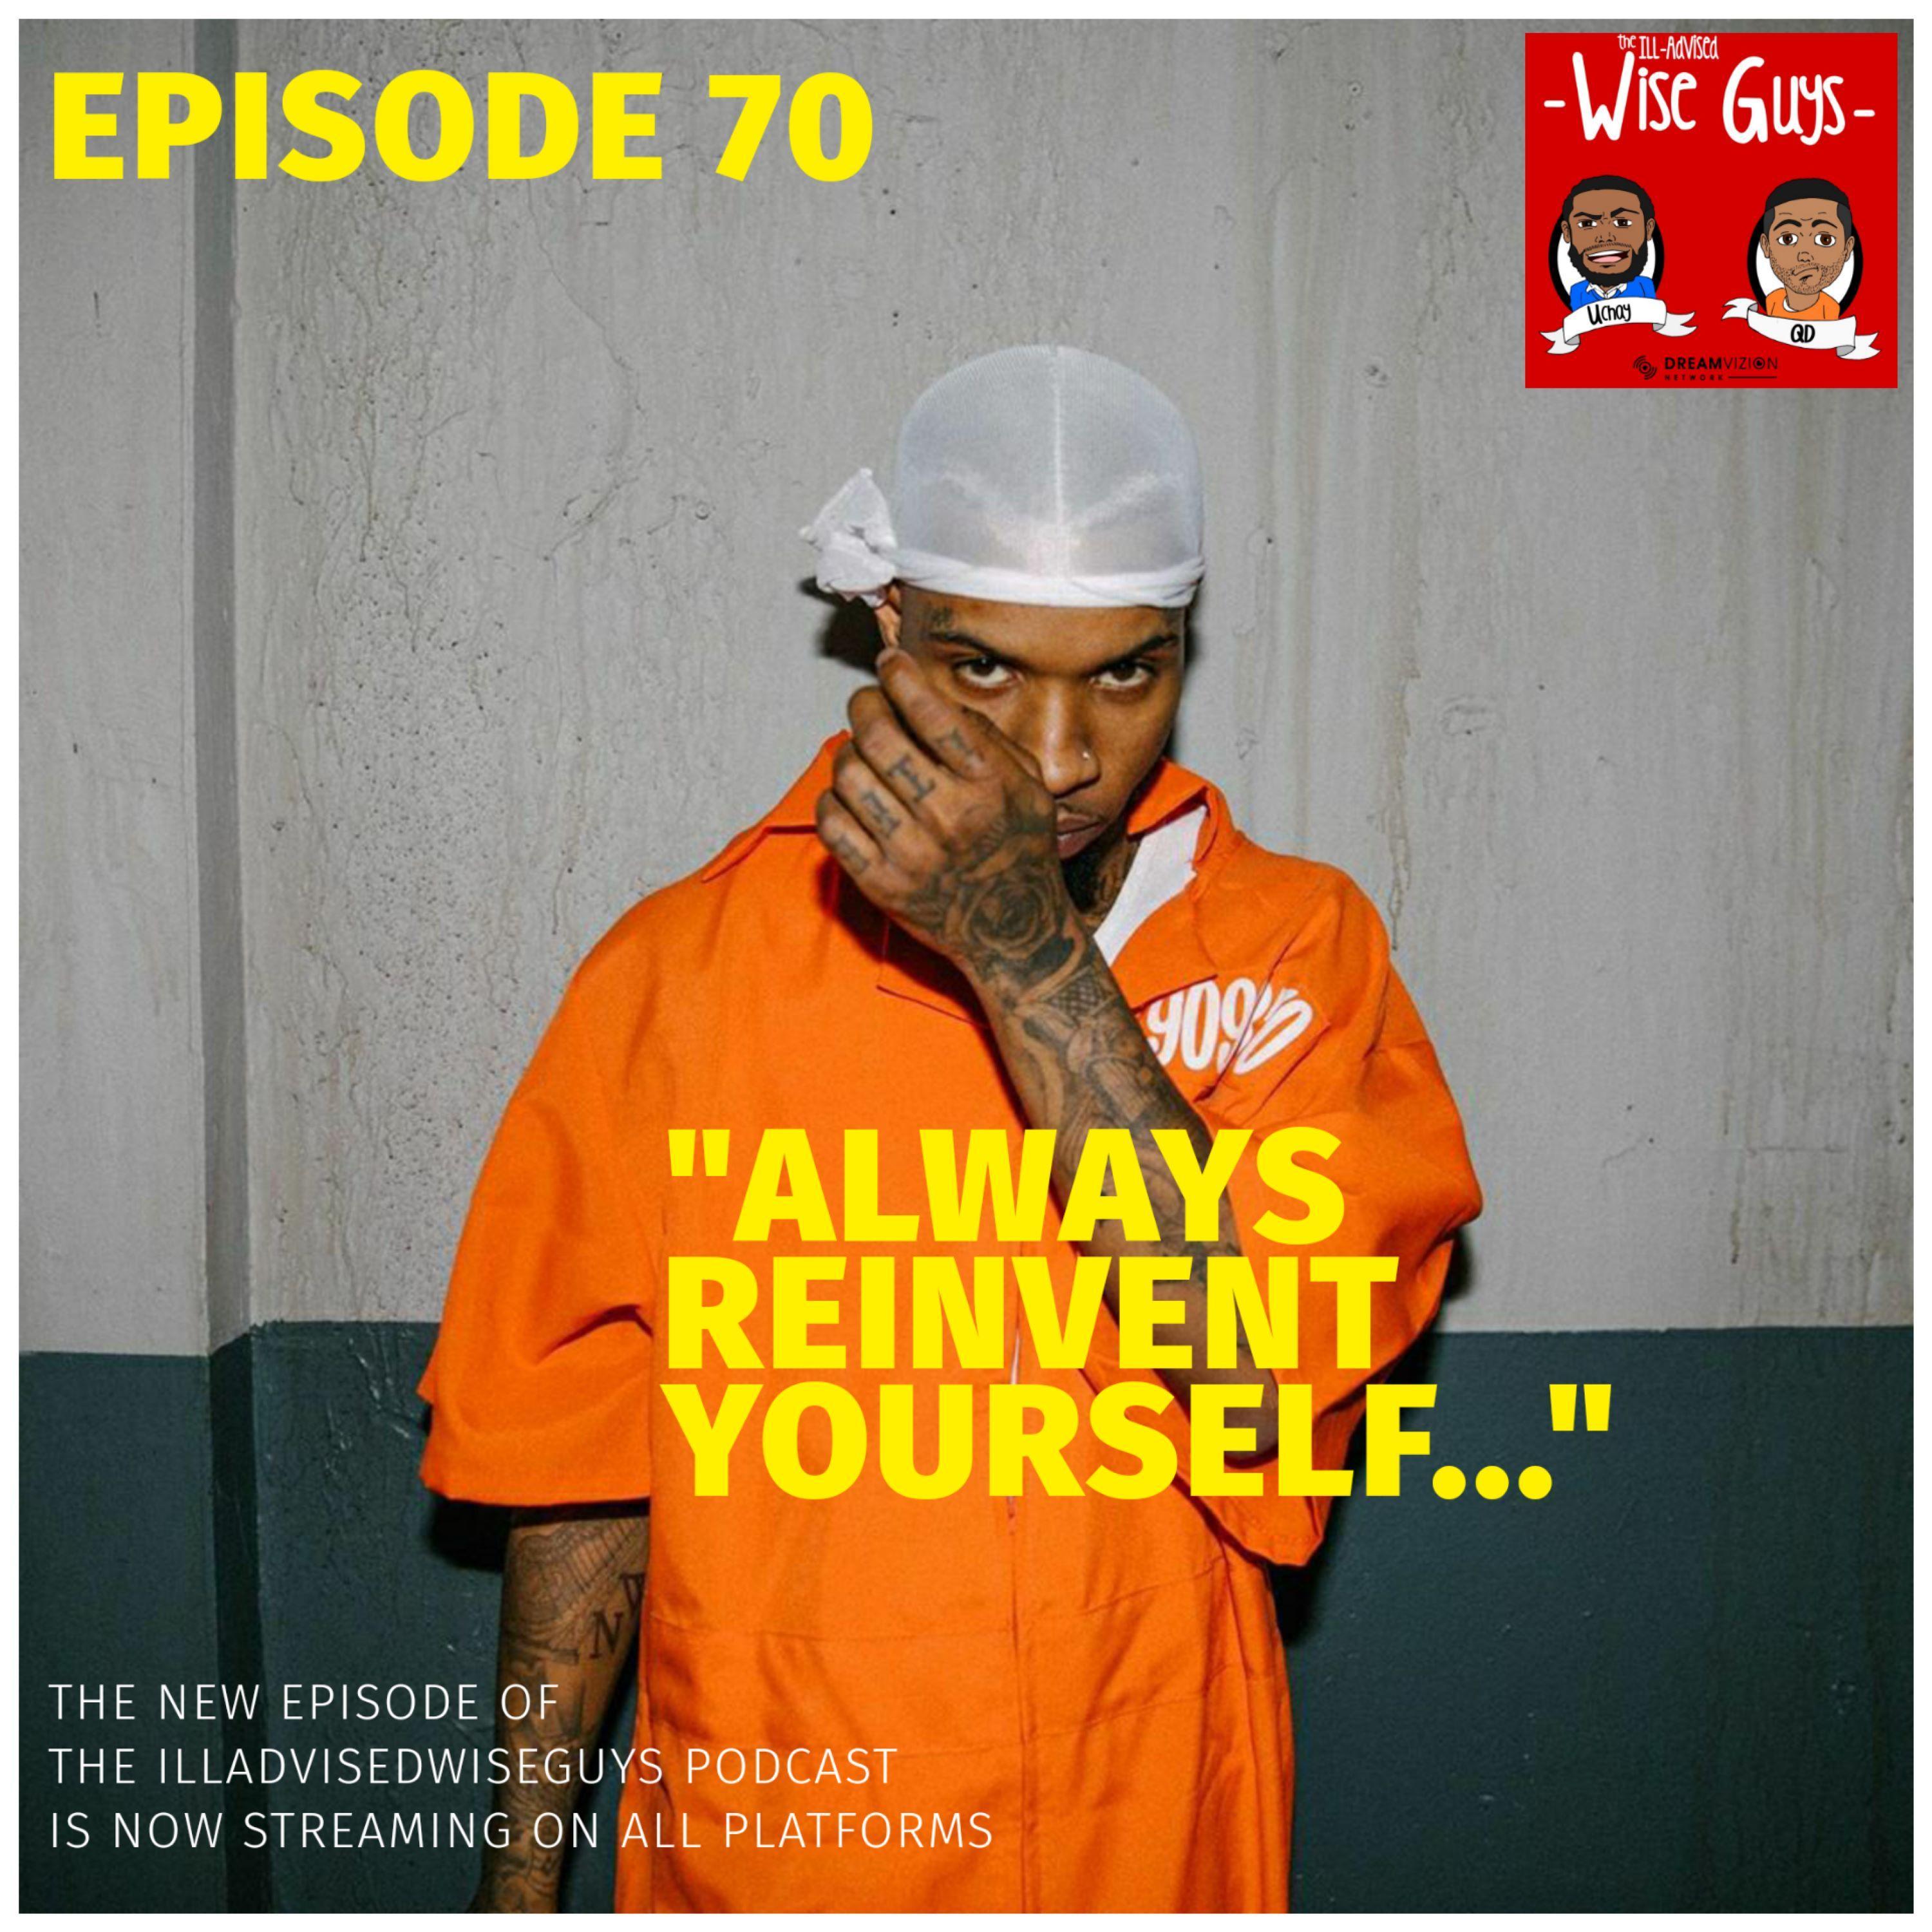 Episode 70 - "Always Reinvent Yourself..." Image